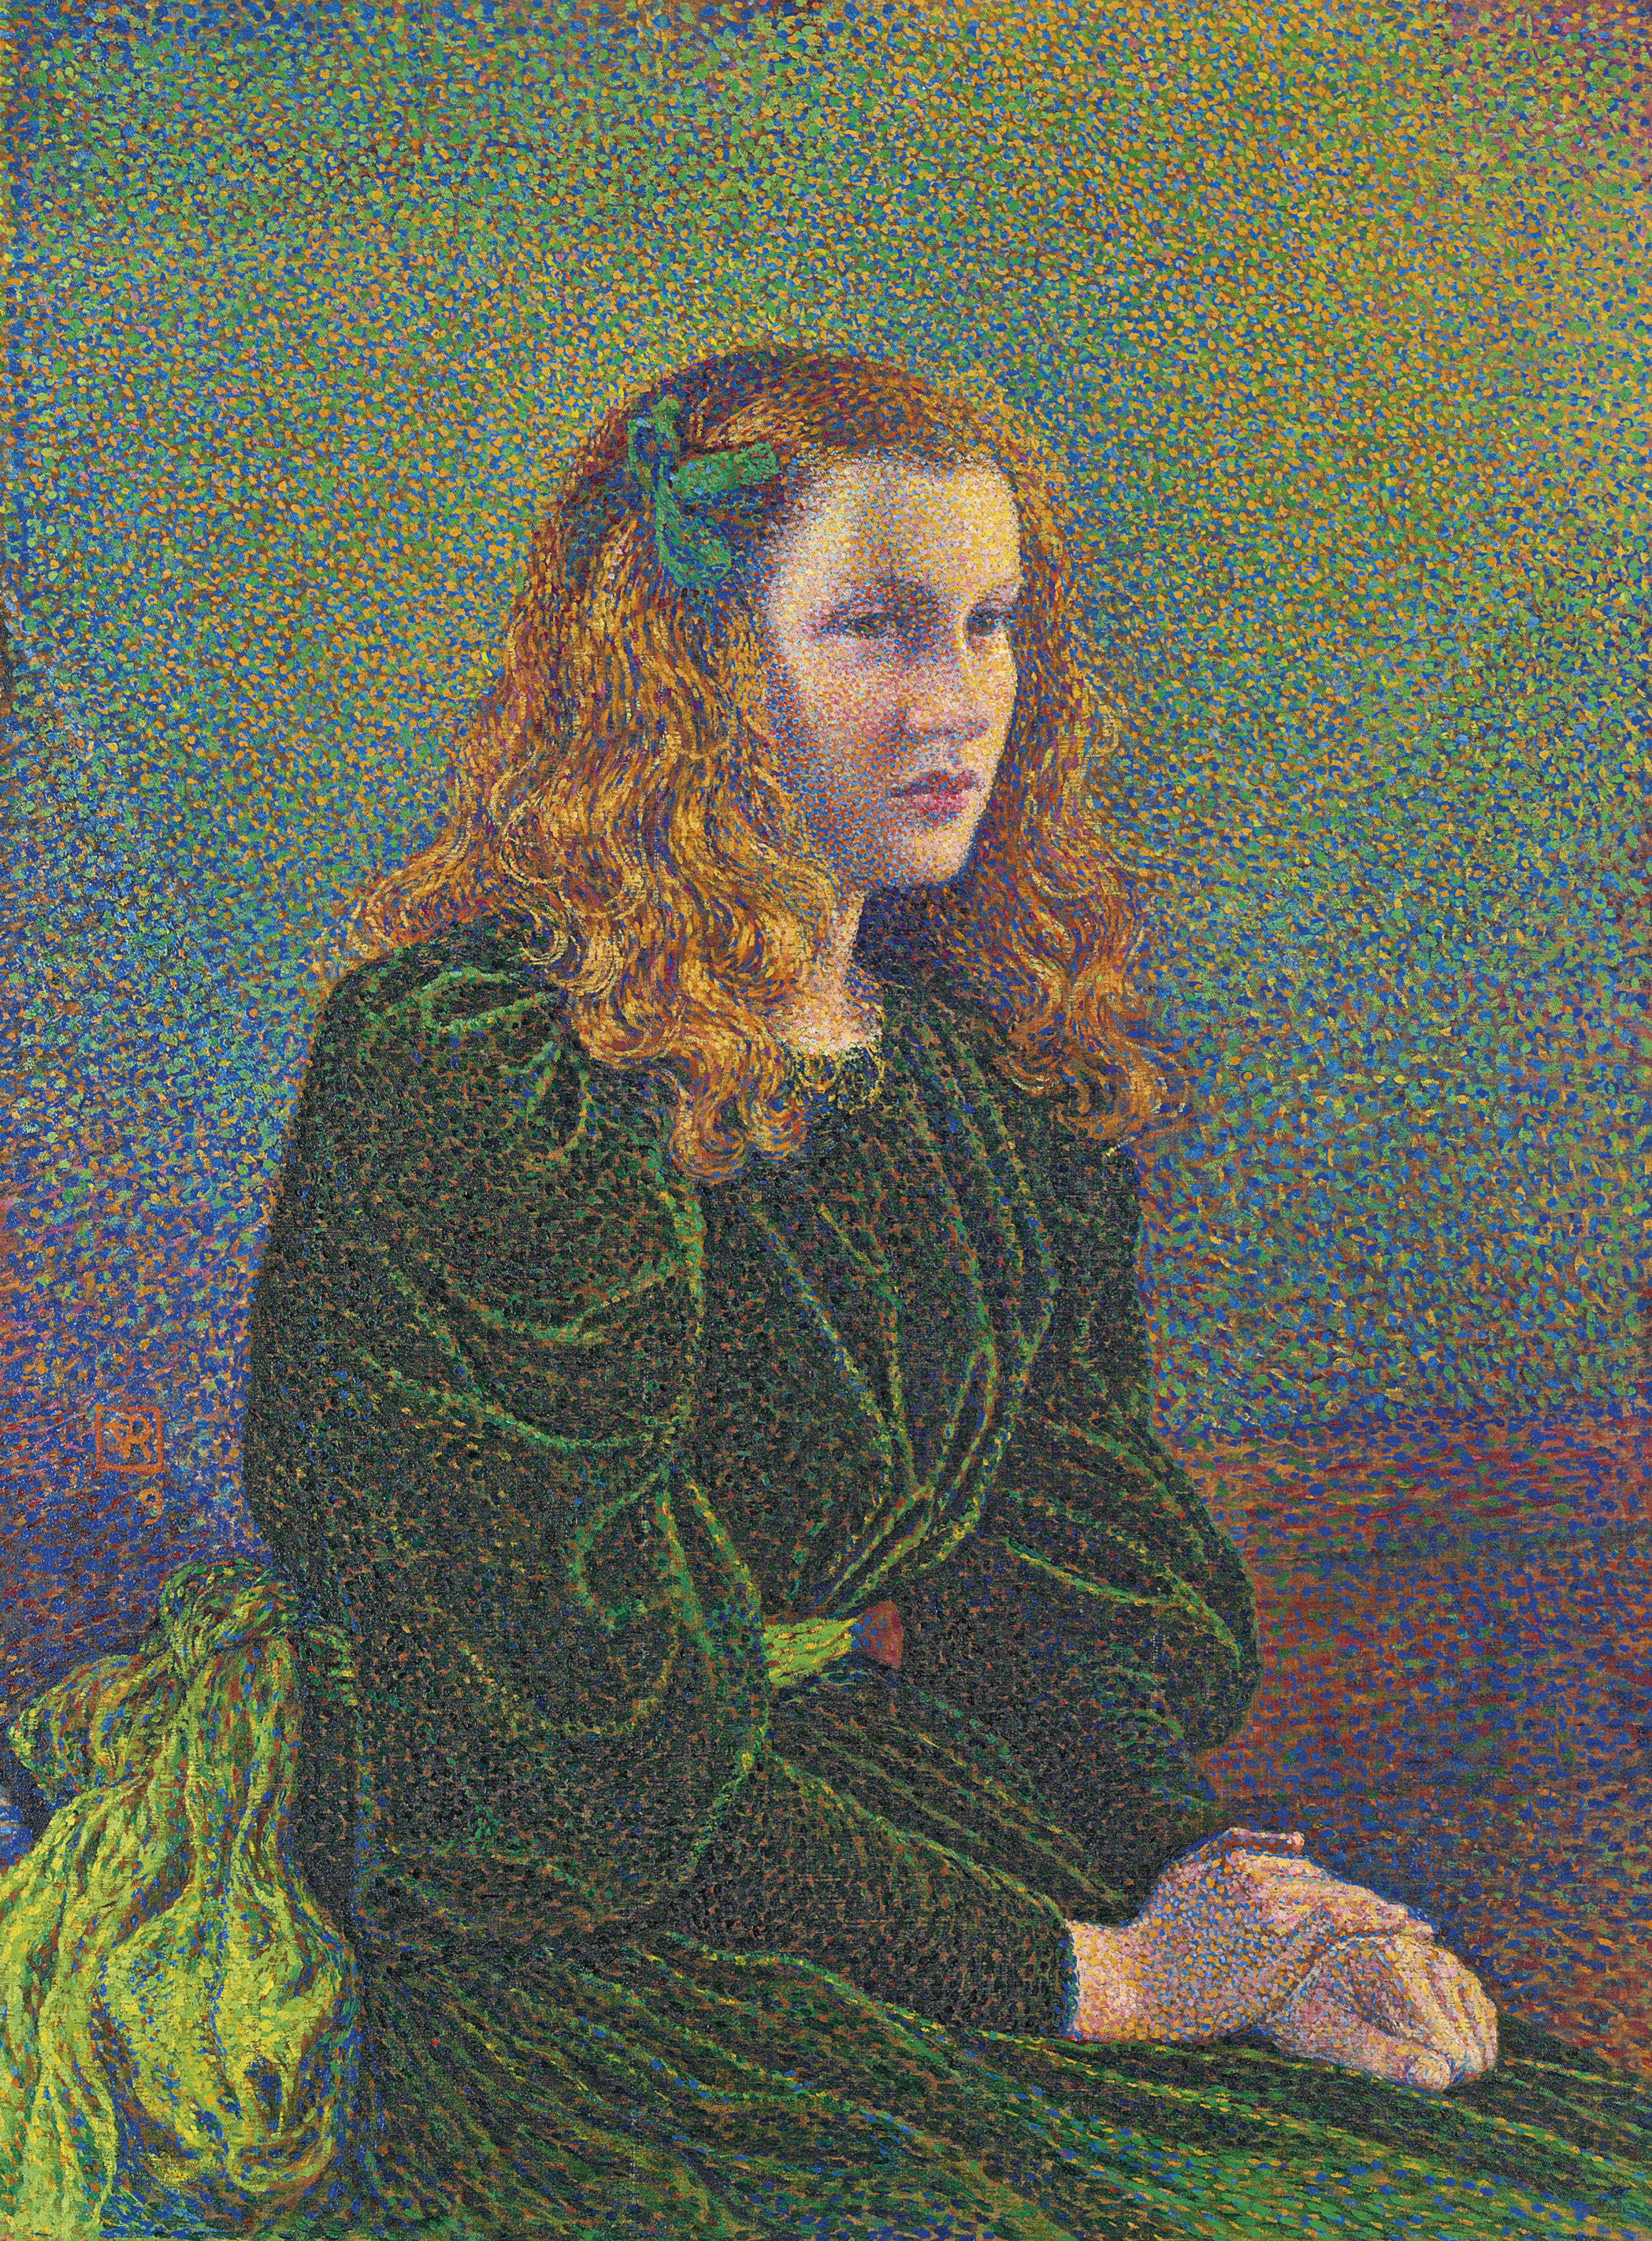 Jovem Mulher num Vestido Verde (Germaine Maréchal) by Theo van Rysselberghe - 1893 - 81.7 x 60.6 cm coleção privada